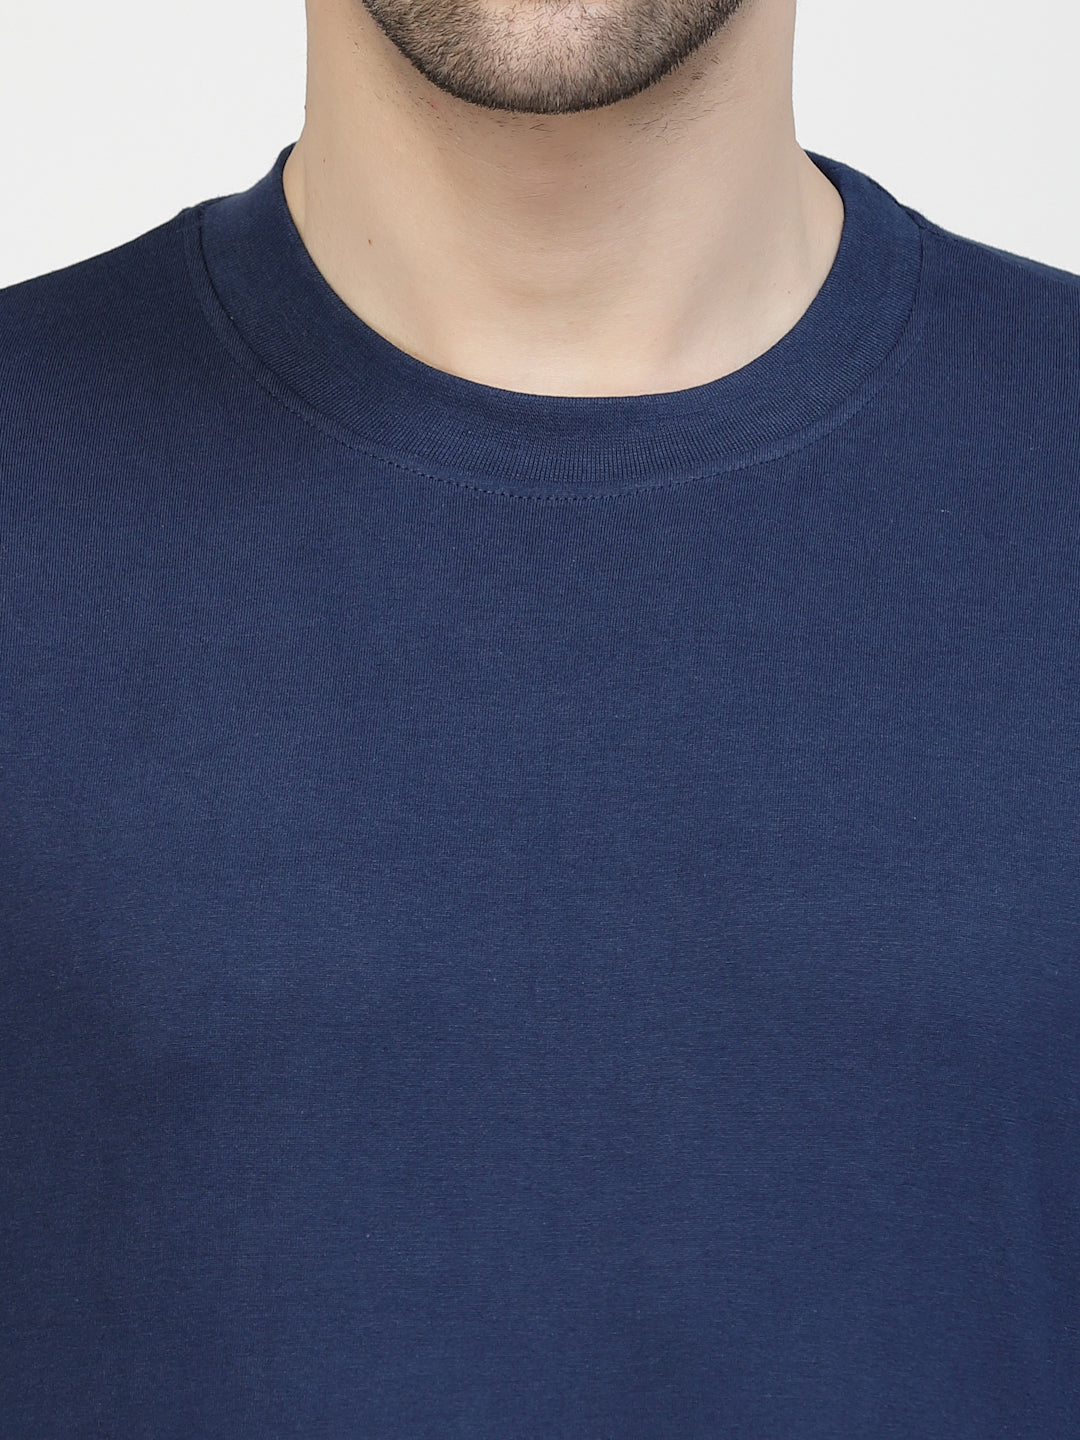 Dark Blue Plain Oversized Drop Shoulder Unisex Tshirt By Stylo Fashion